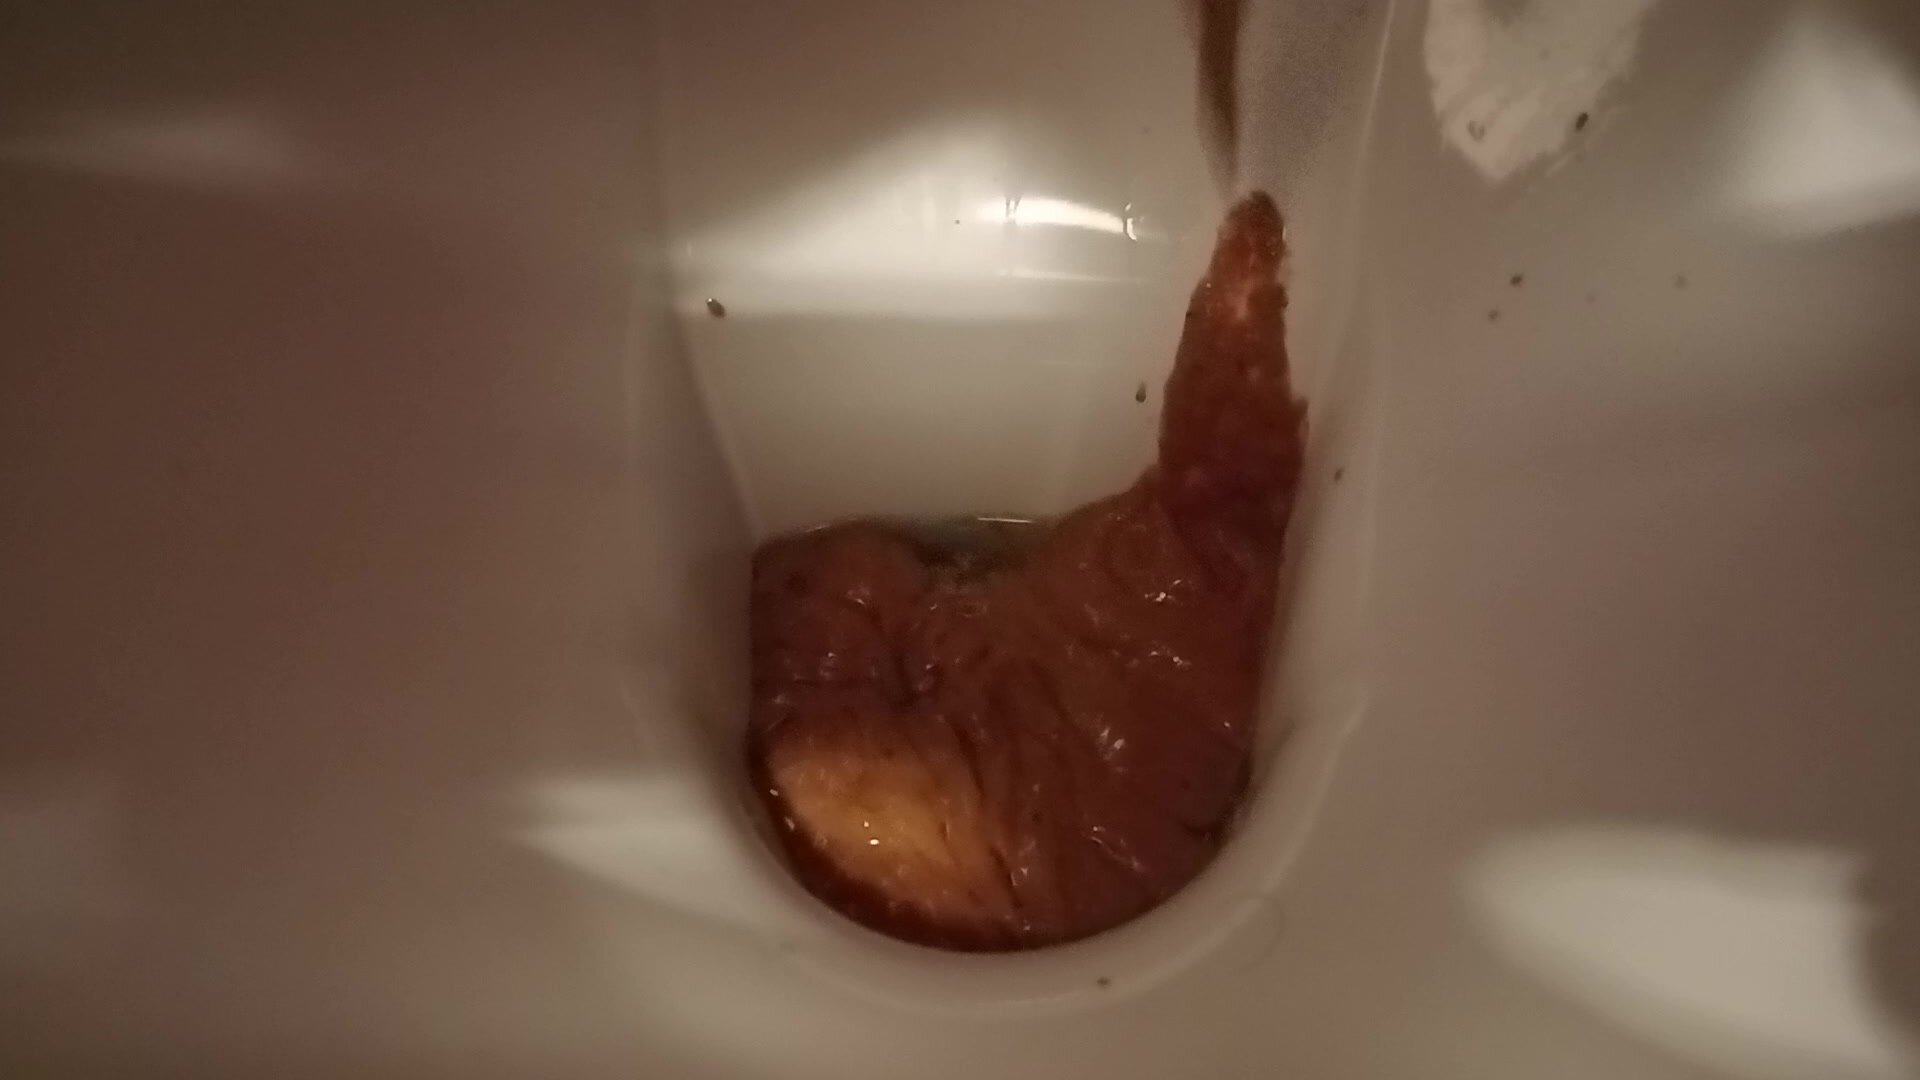 quick diarrhea - video 4